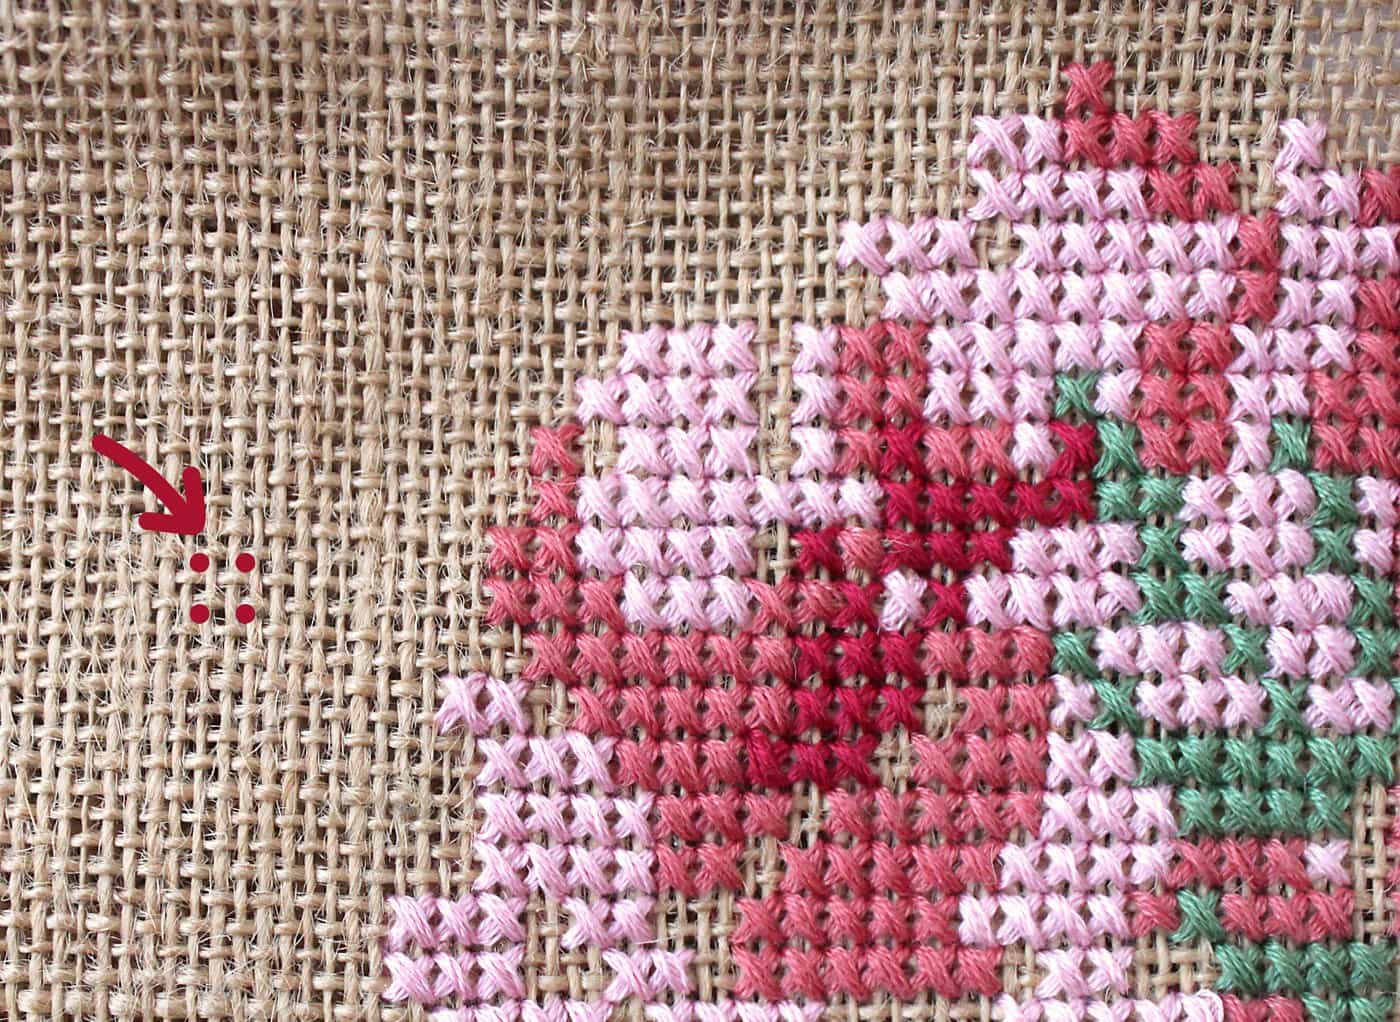 Free pattern for a Cross Stitch Burlap Bag - learn how to cross stitch a rose on a burlap bag #crossstitch #crossstitchrose #crossstitchpattern